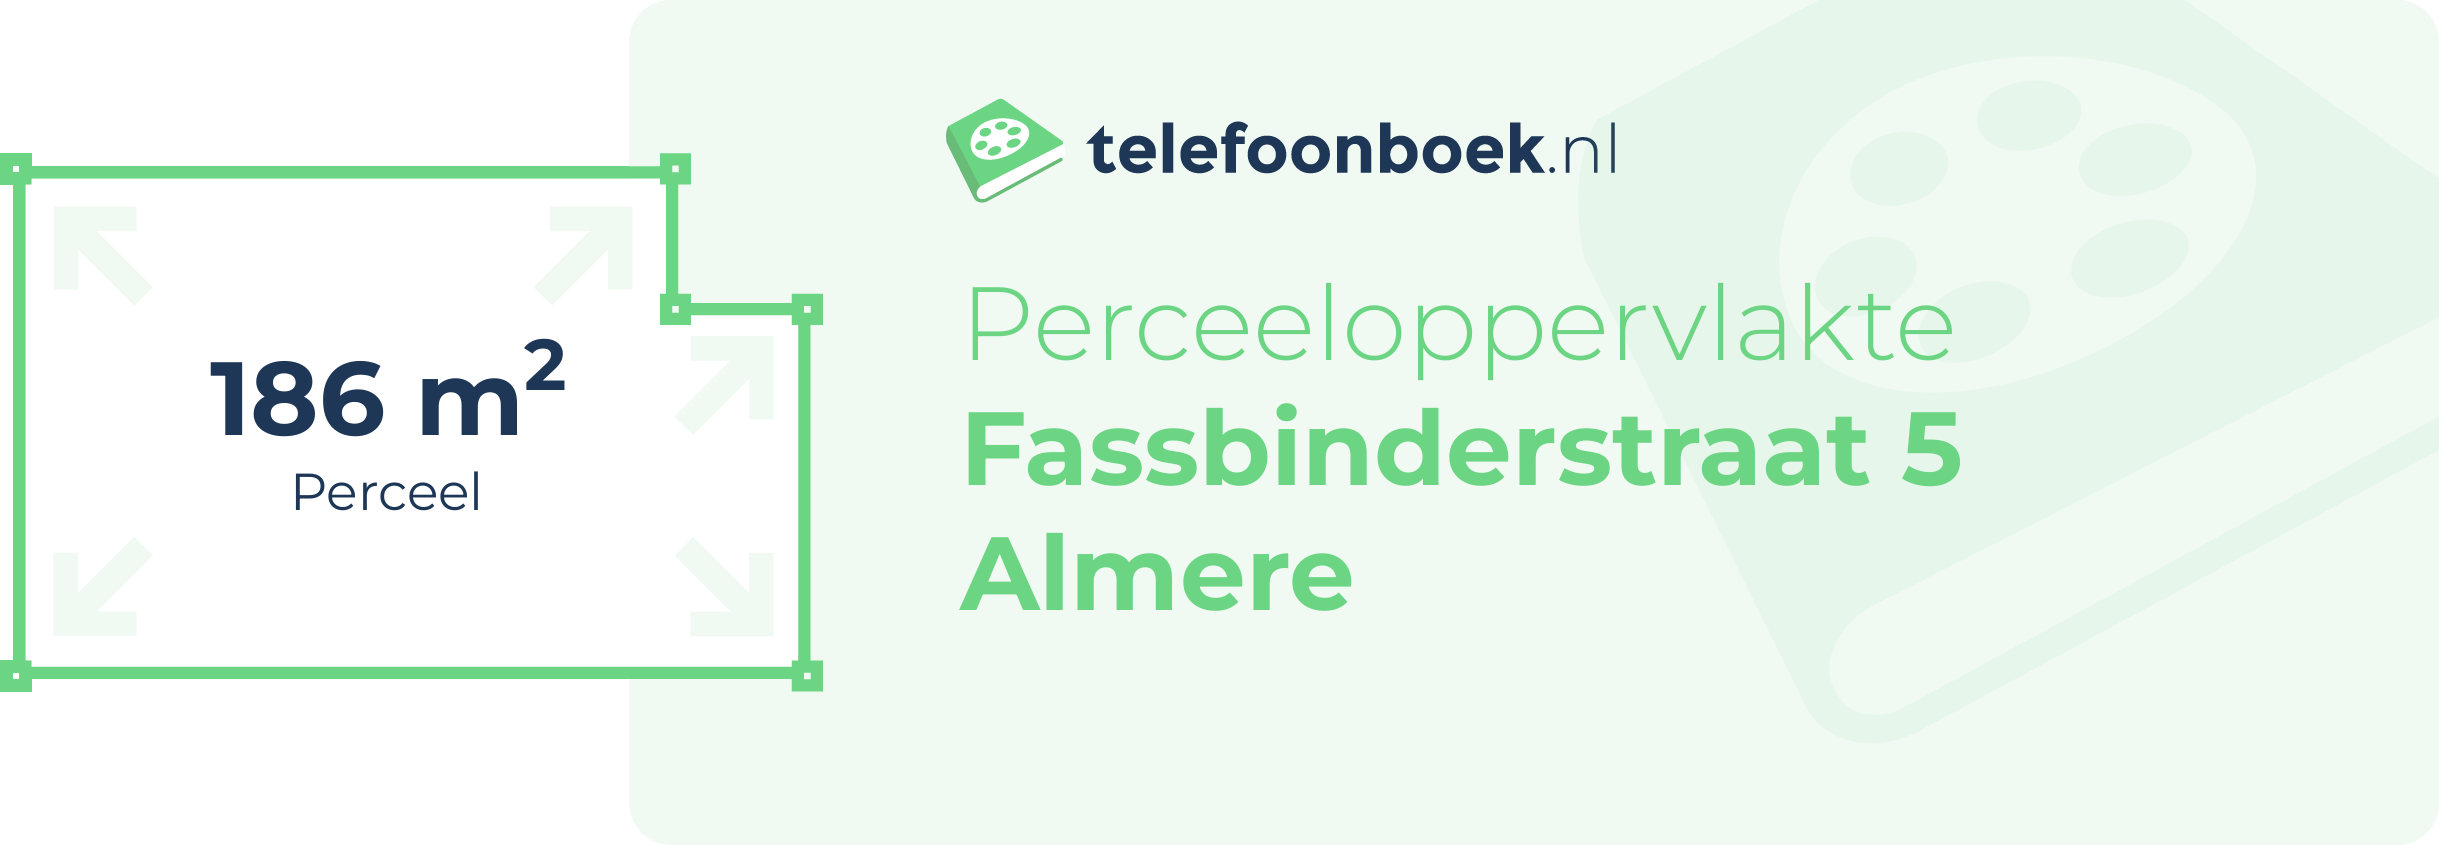 Perceeloppervlakte Fassbinderstraat 5 Almere